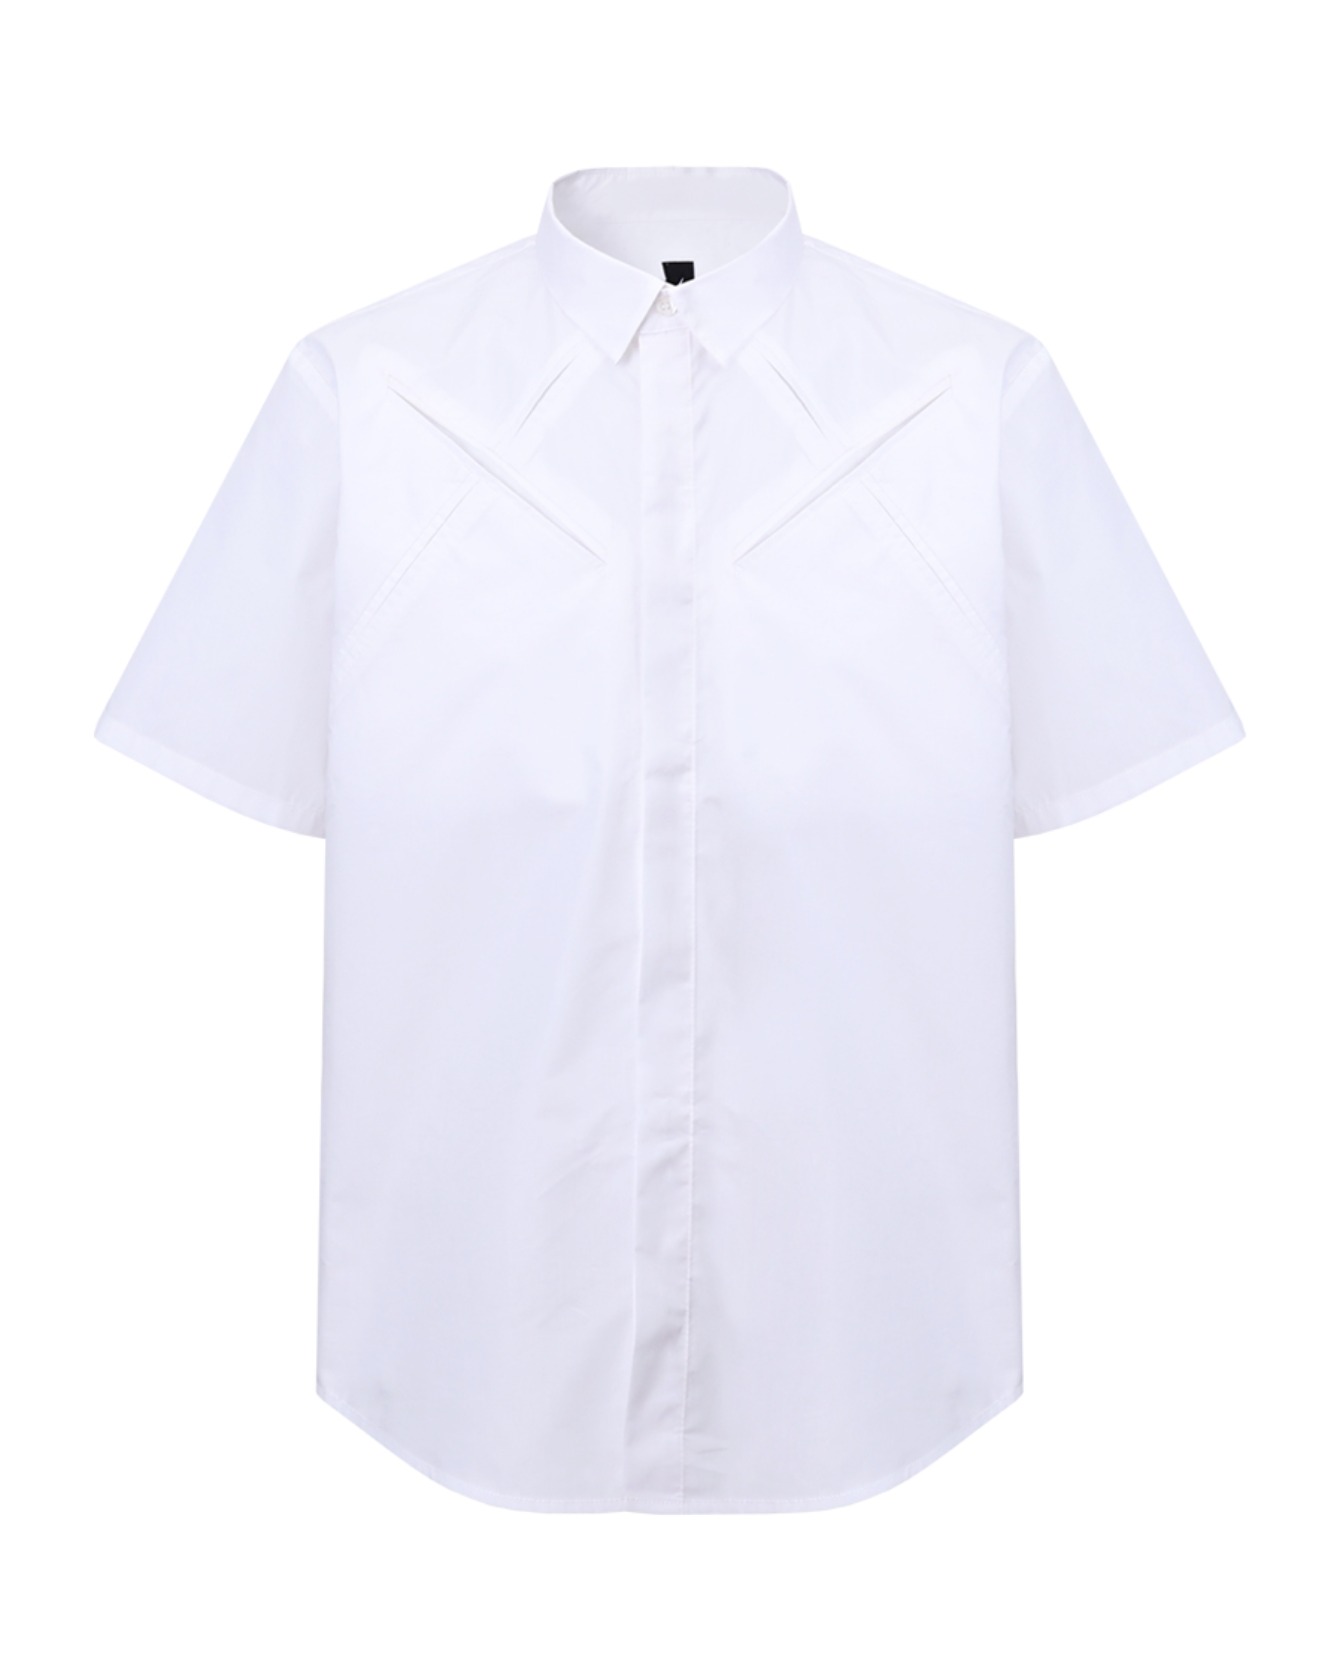 X JIP Shirts(White)